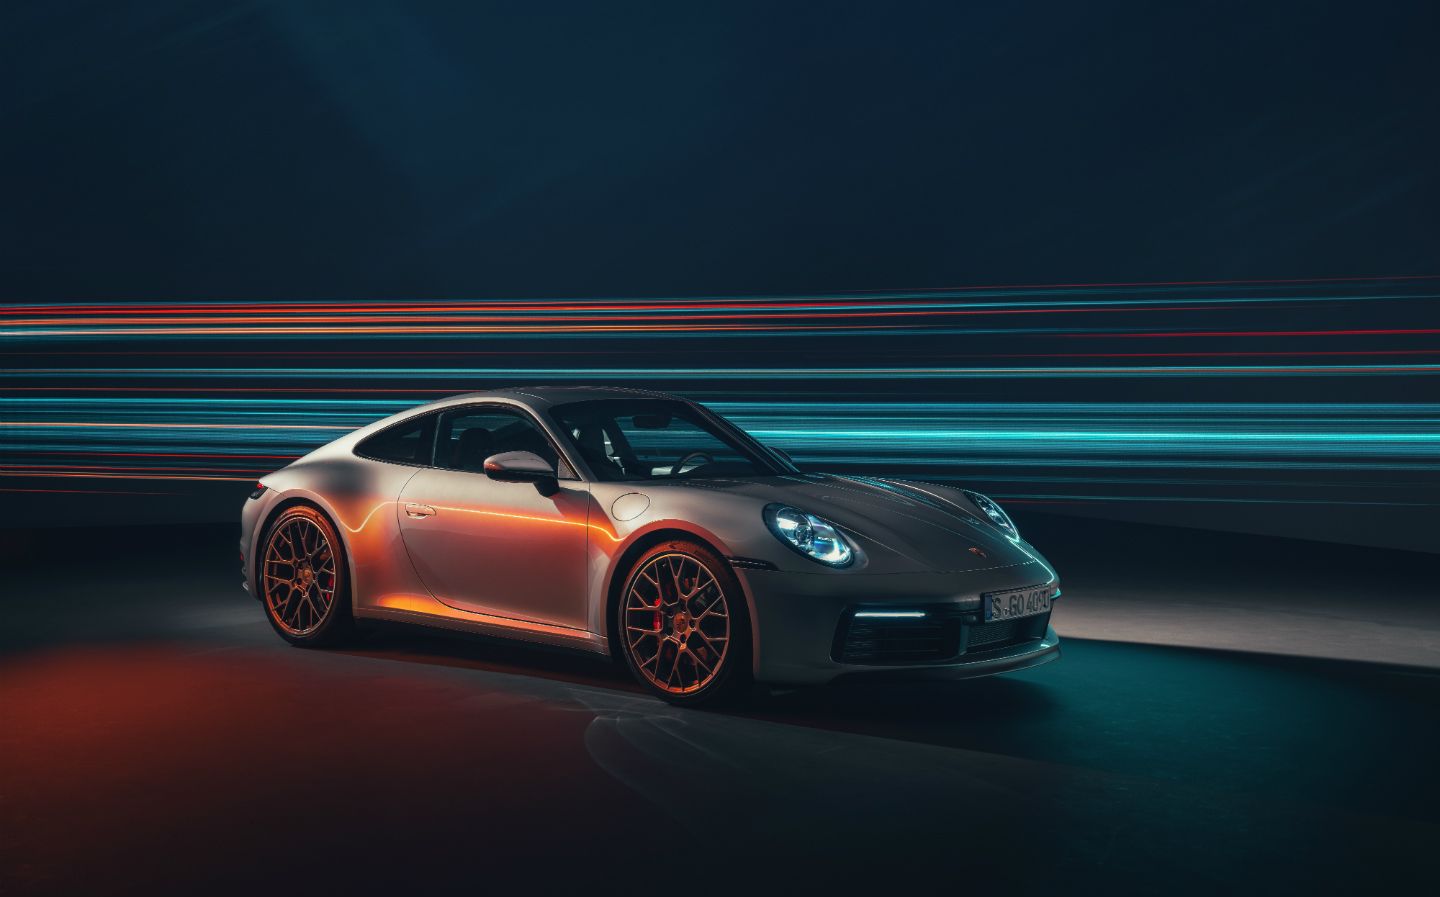 Porsche 911: prices, power, specs and image